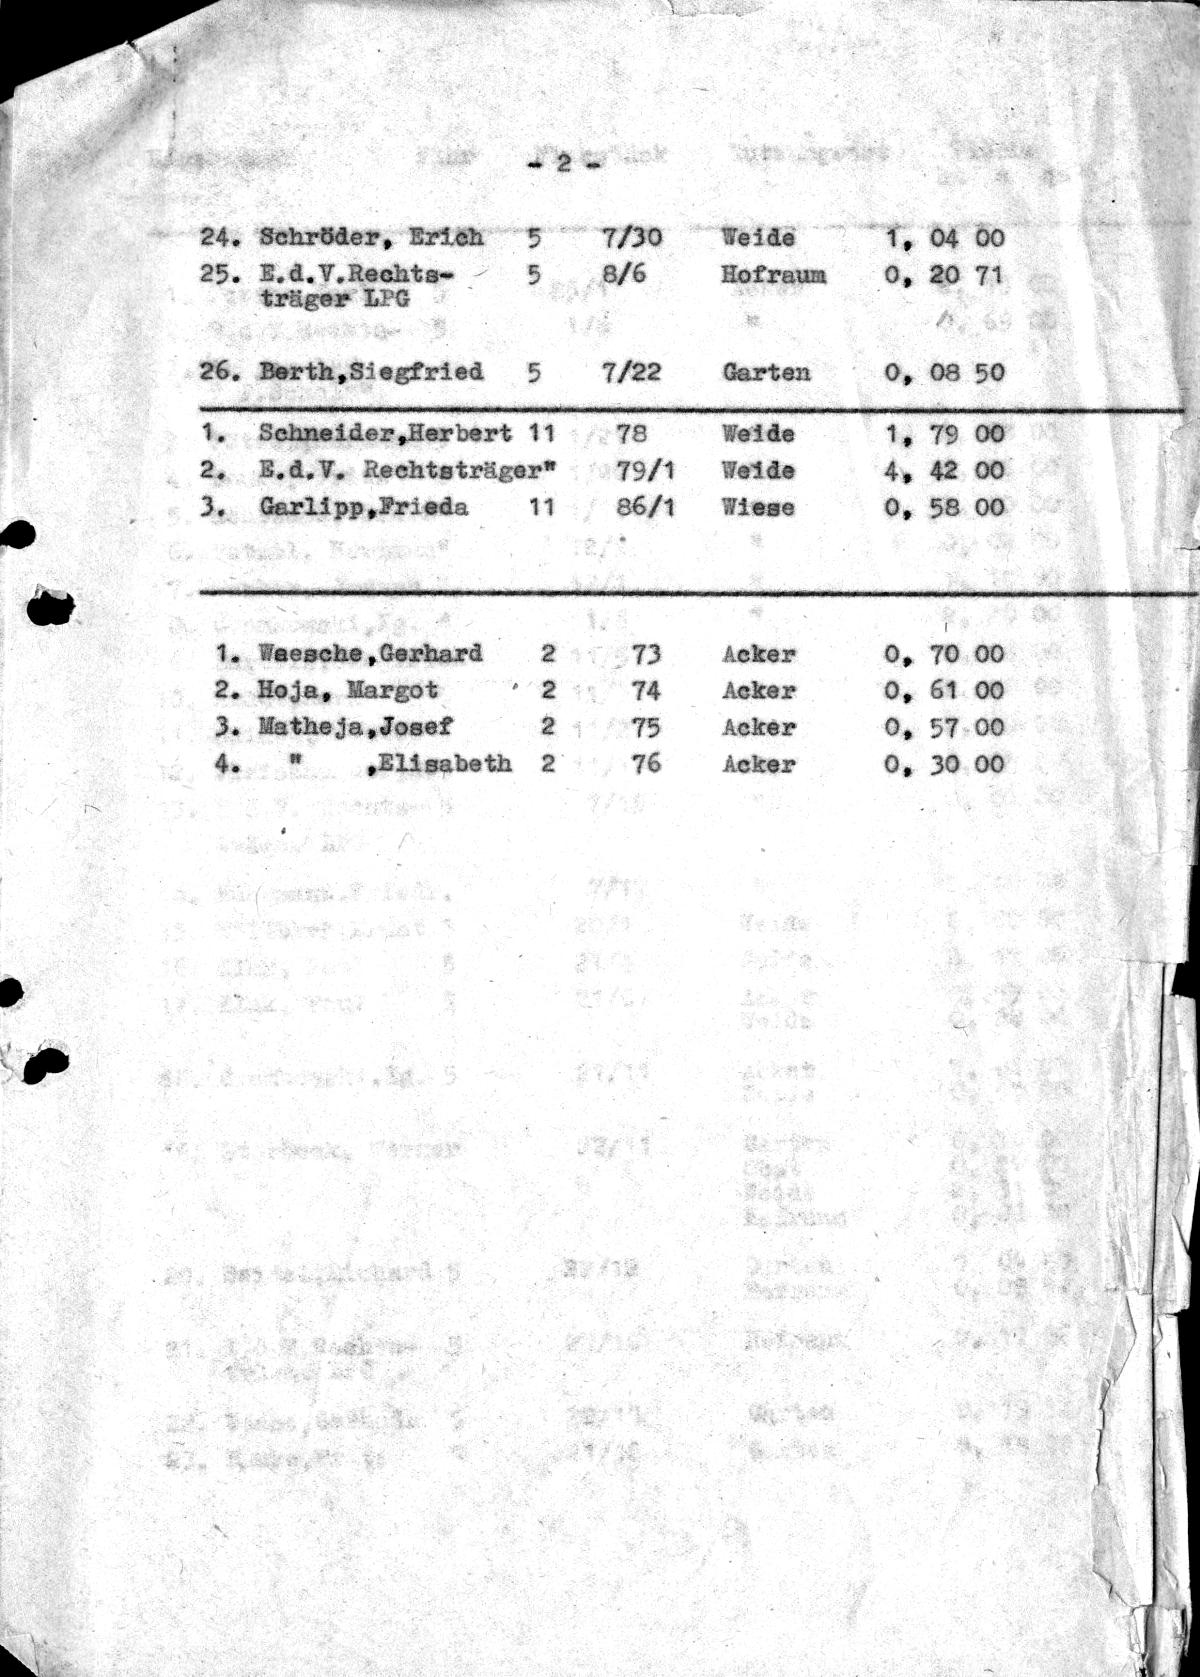  KKW Stendal, Bodennutzungsvertrag 1975